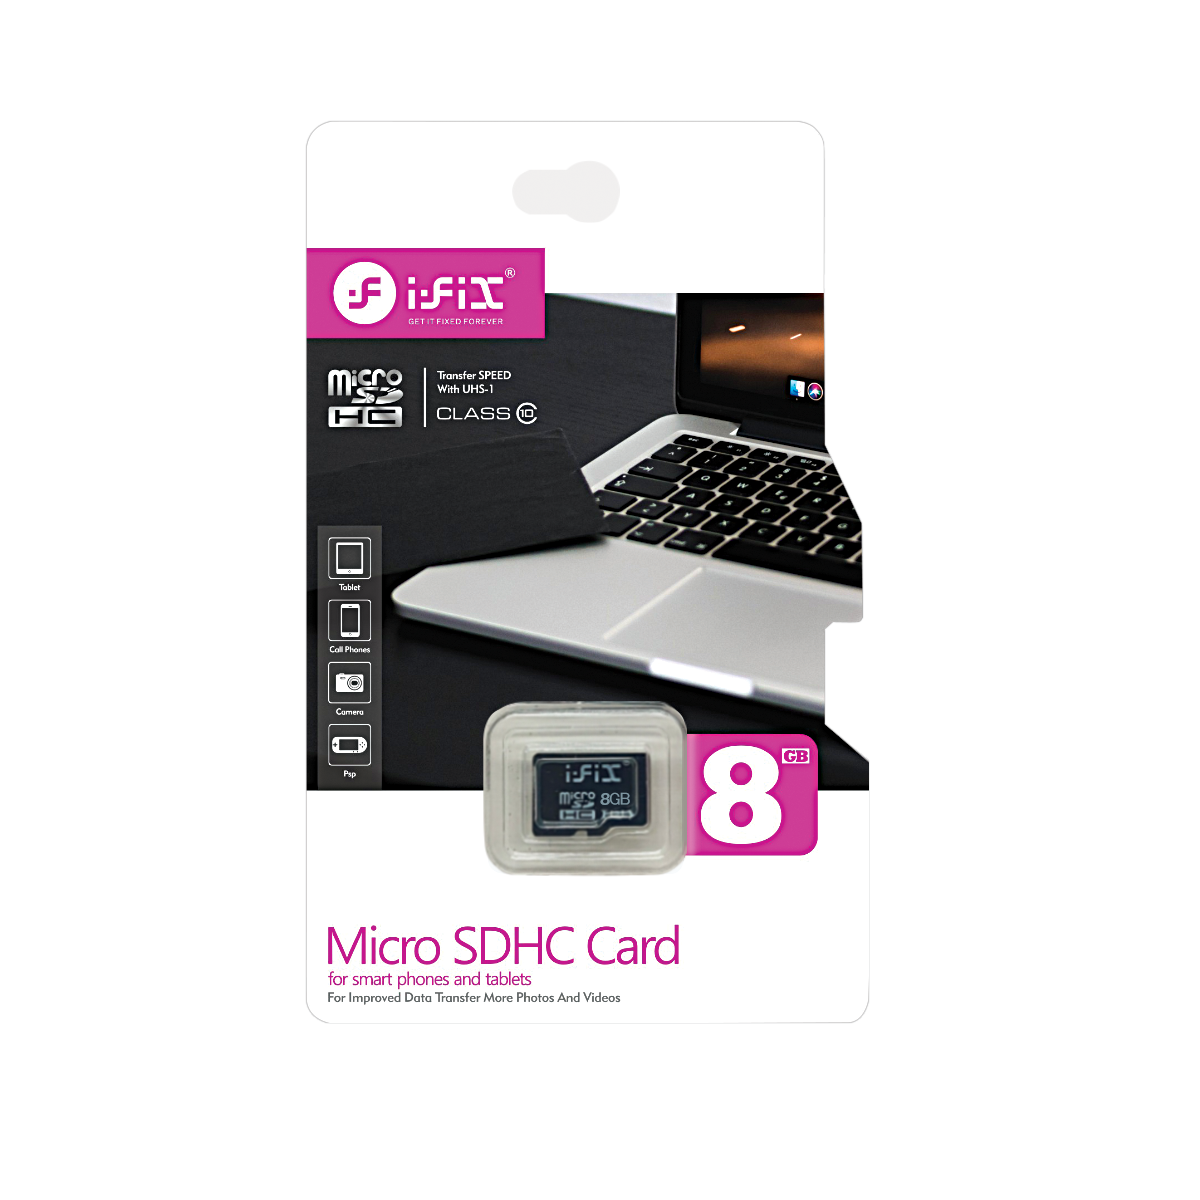 iFiX 8GB Memory card